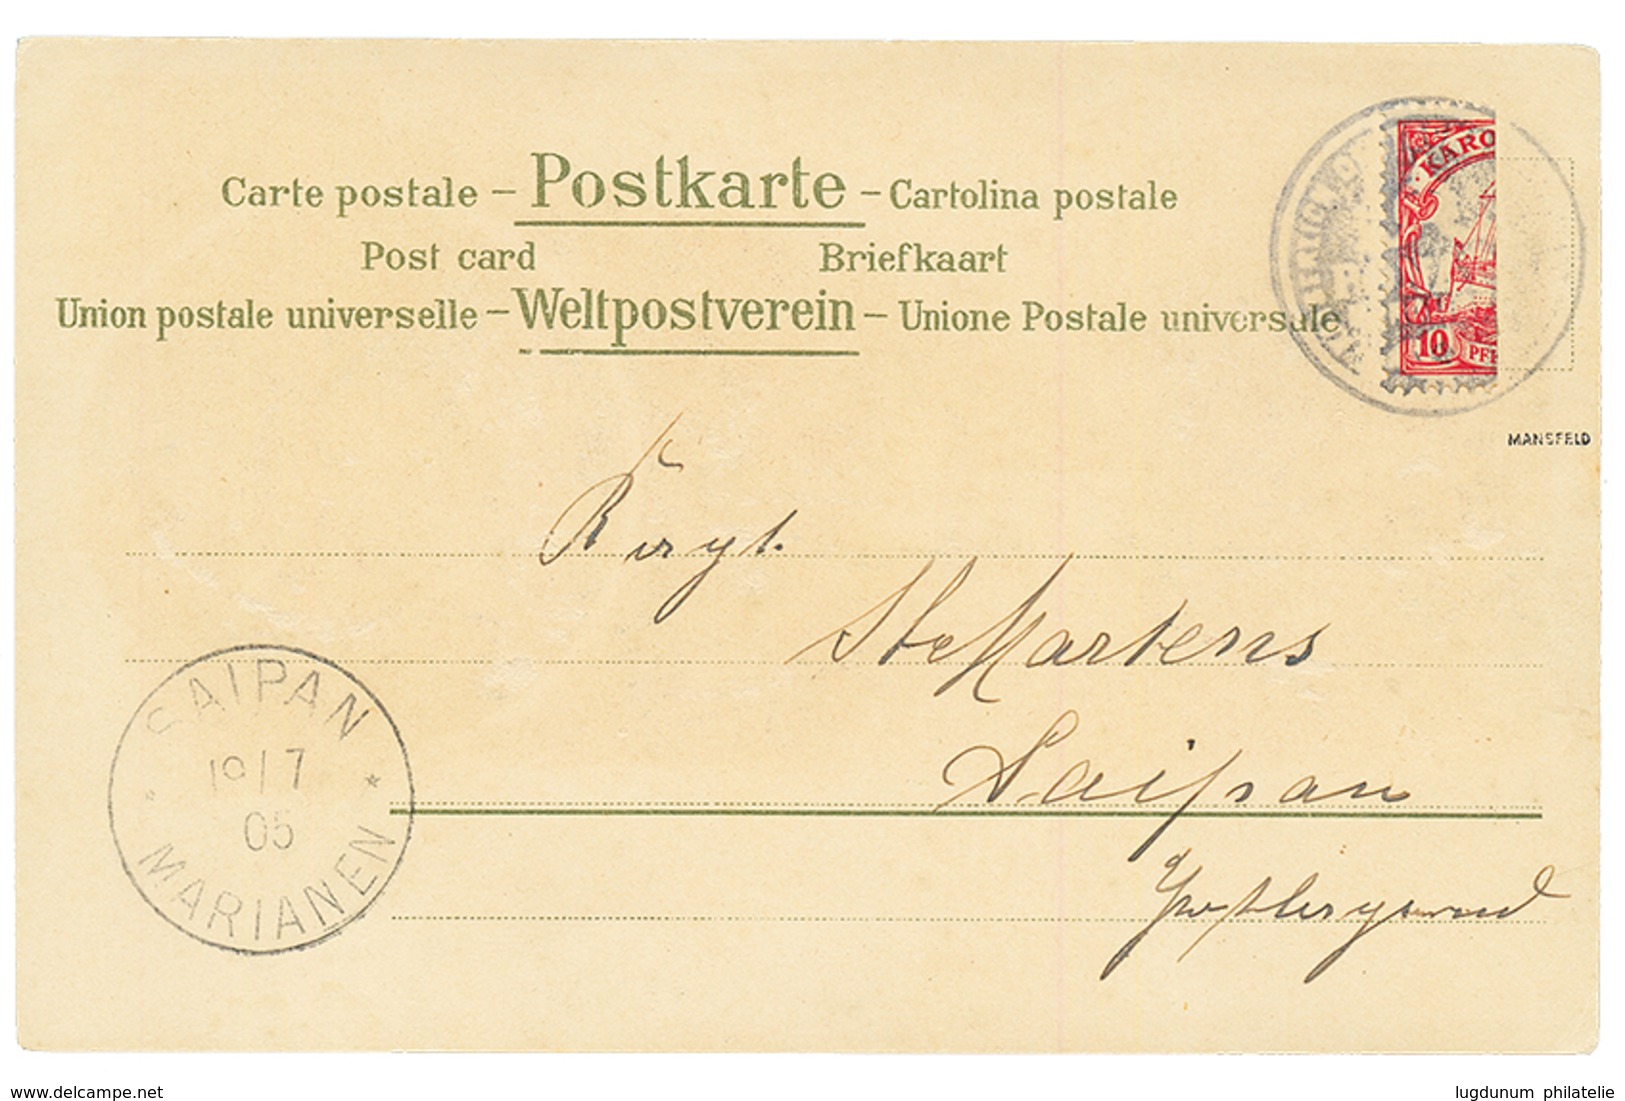 1905 Bisect 10pf Canc. Negativ Cachet PONAPE On Card (GruSS) To SAIPAN MARIANEN. Signed MANSFELD. Vvf. - Caroline Islands